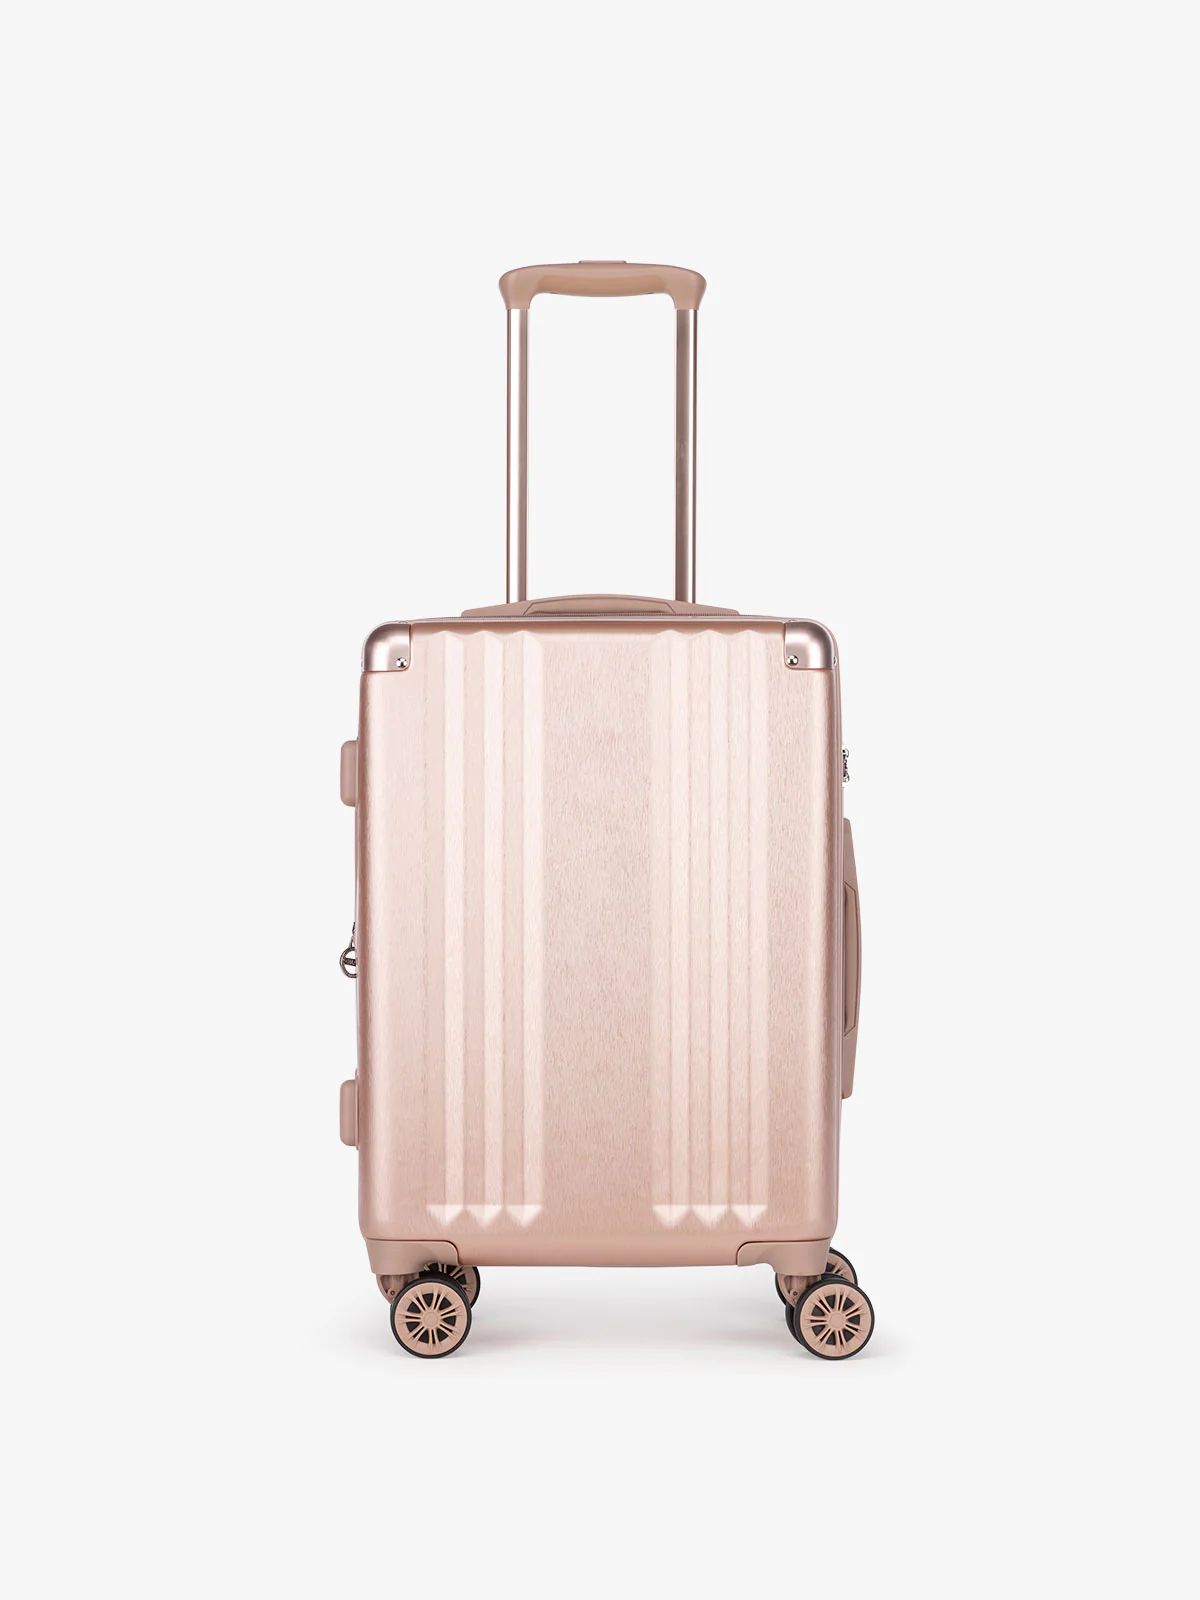 Ambeur Carry On Luggage | CALPAK | CALPAK Travel